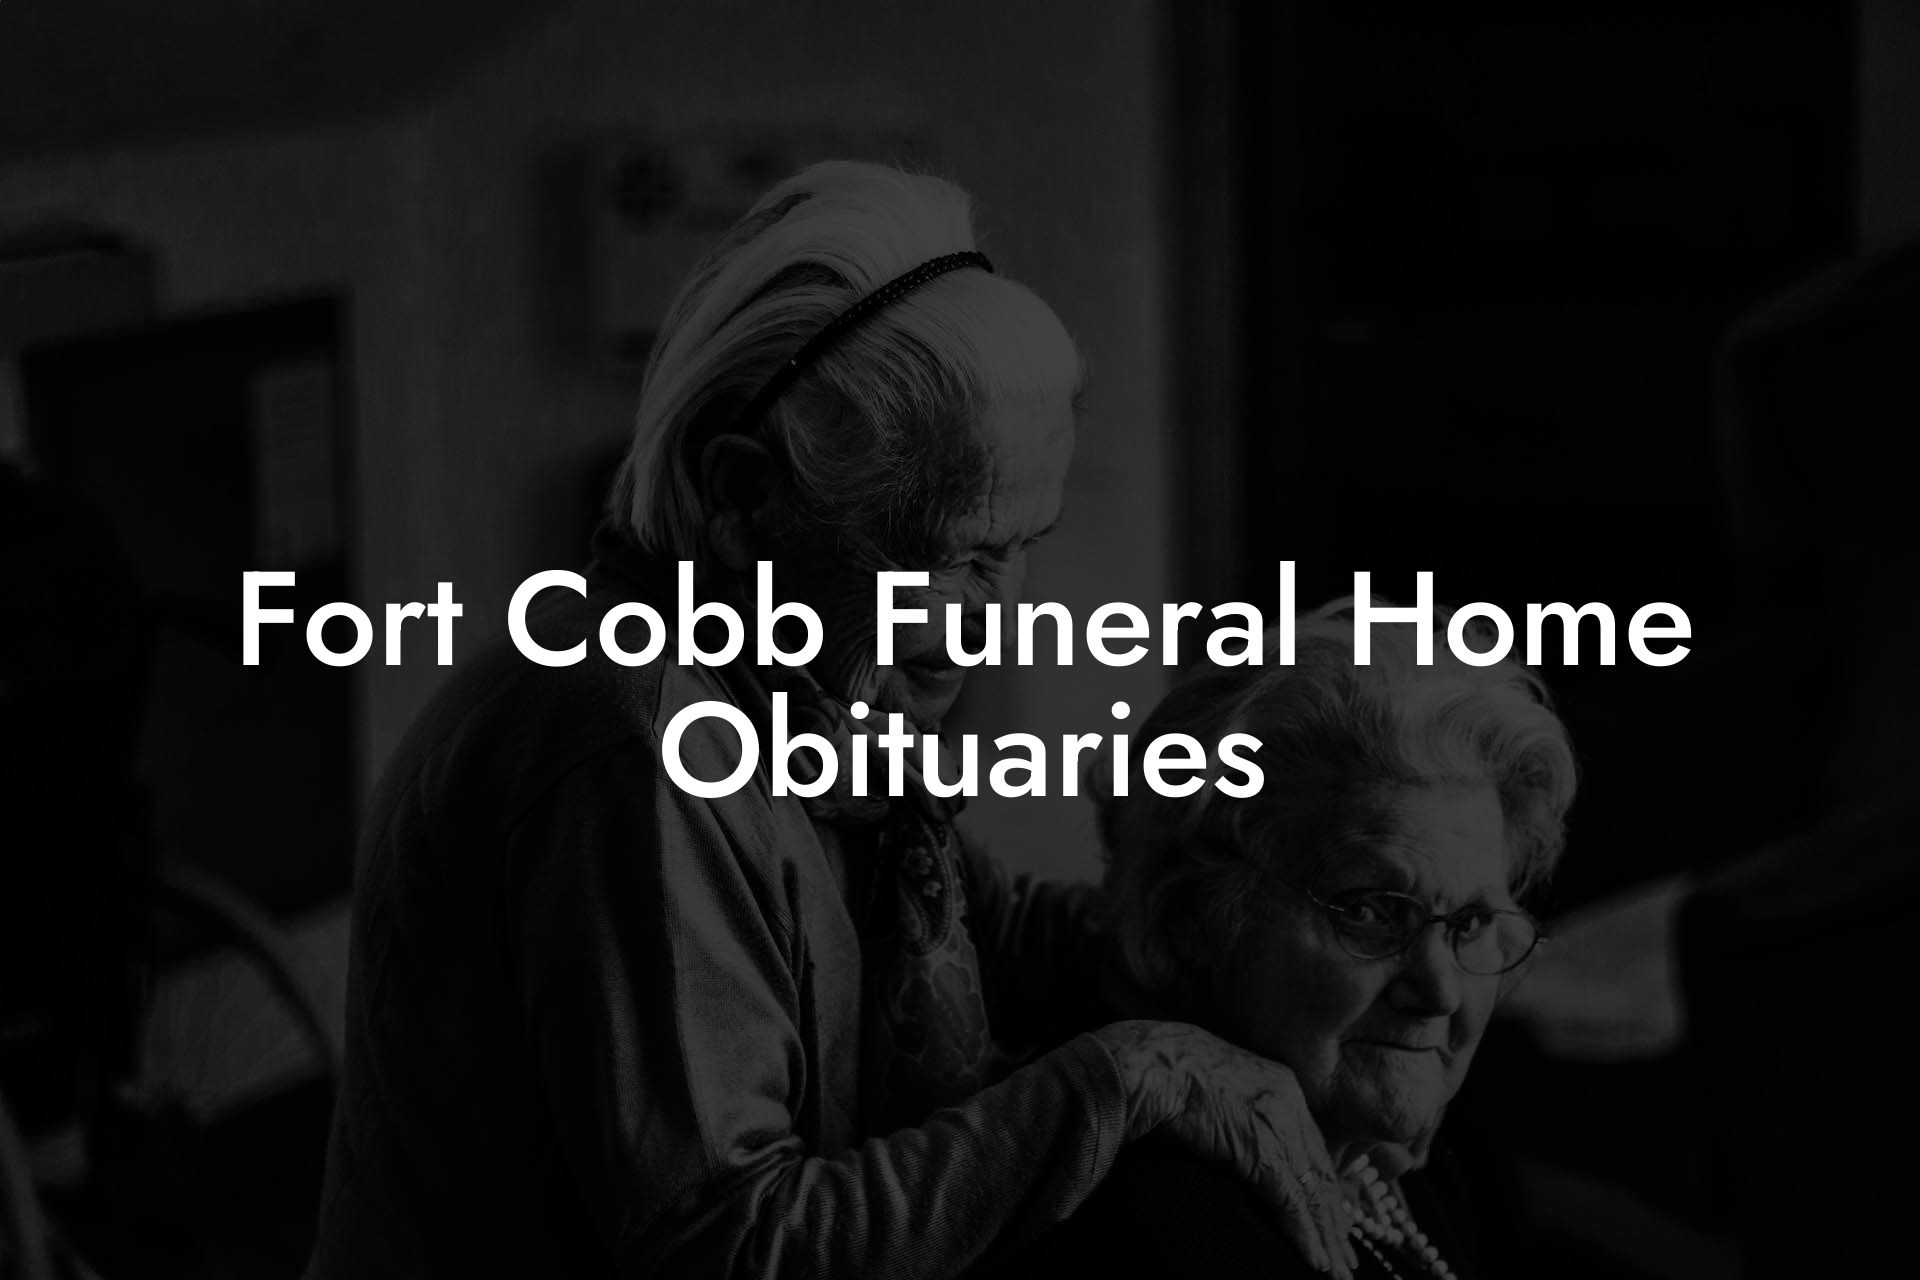 Fort Cobb Funeral Home Obituaries